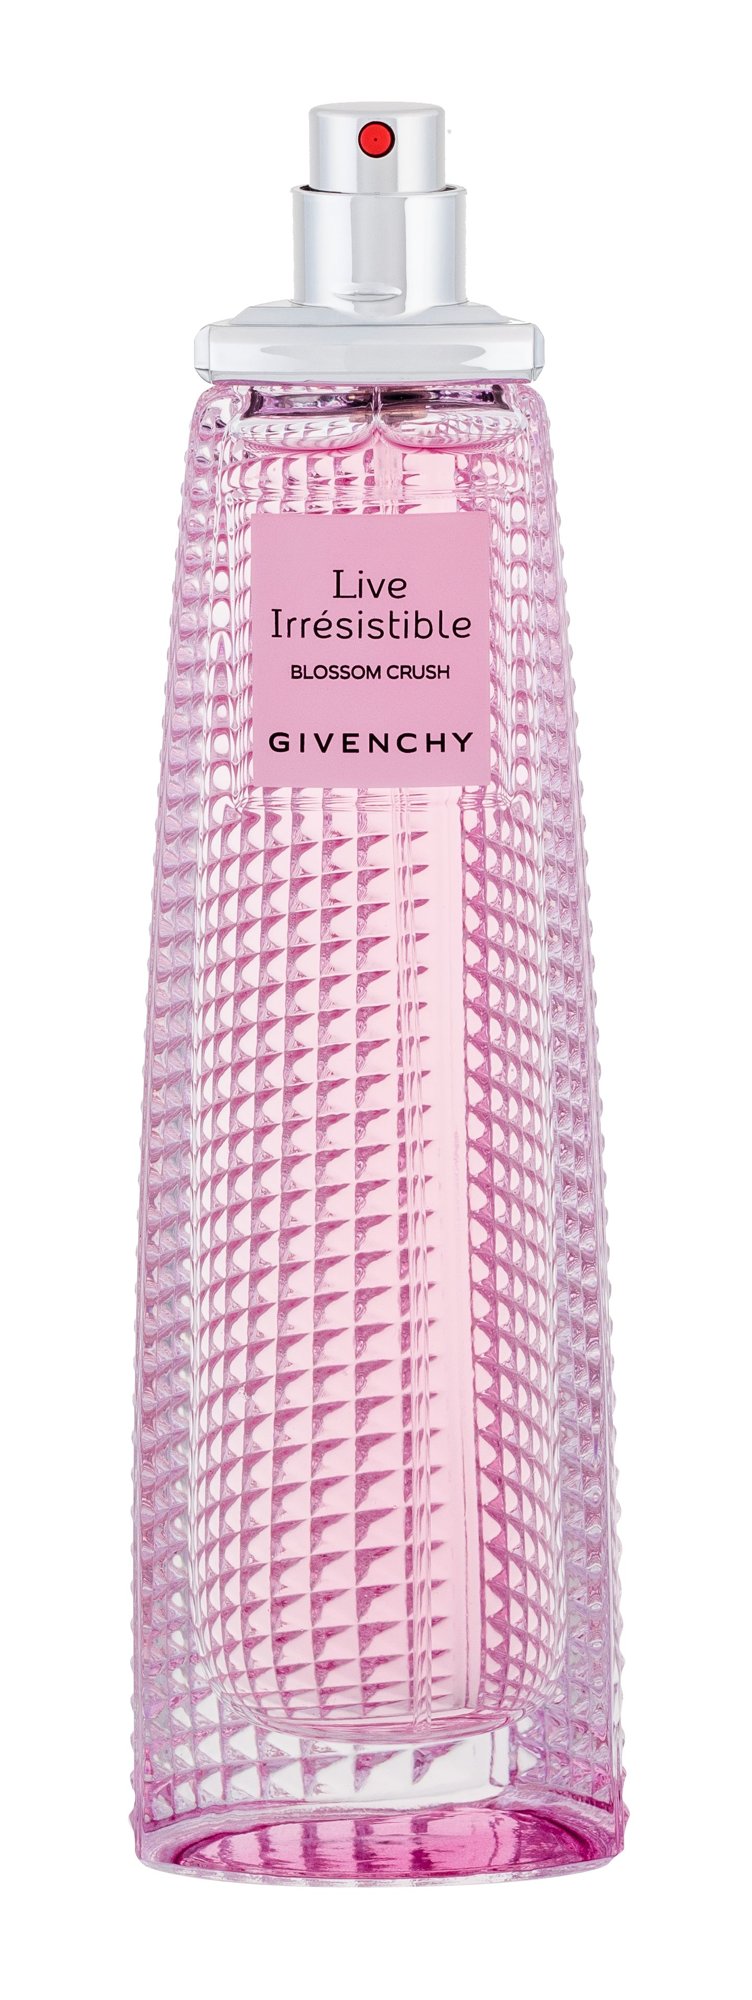 Givenchy Live Irrésistible Blossom Crush